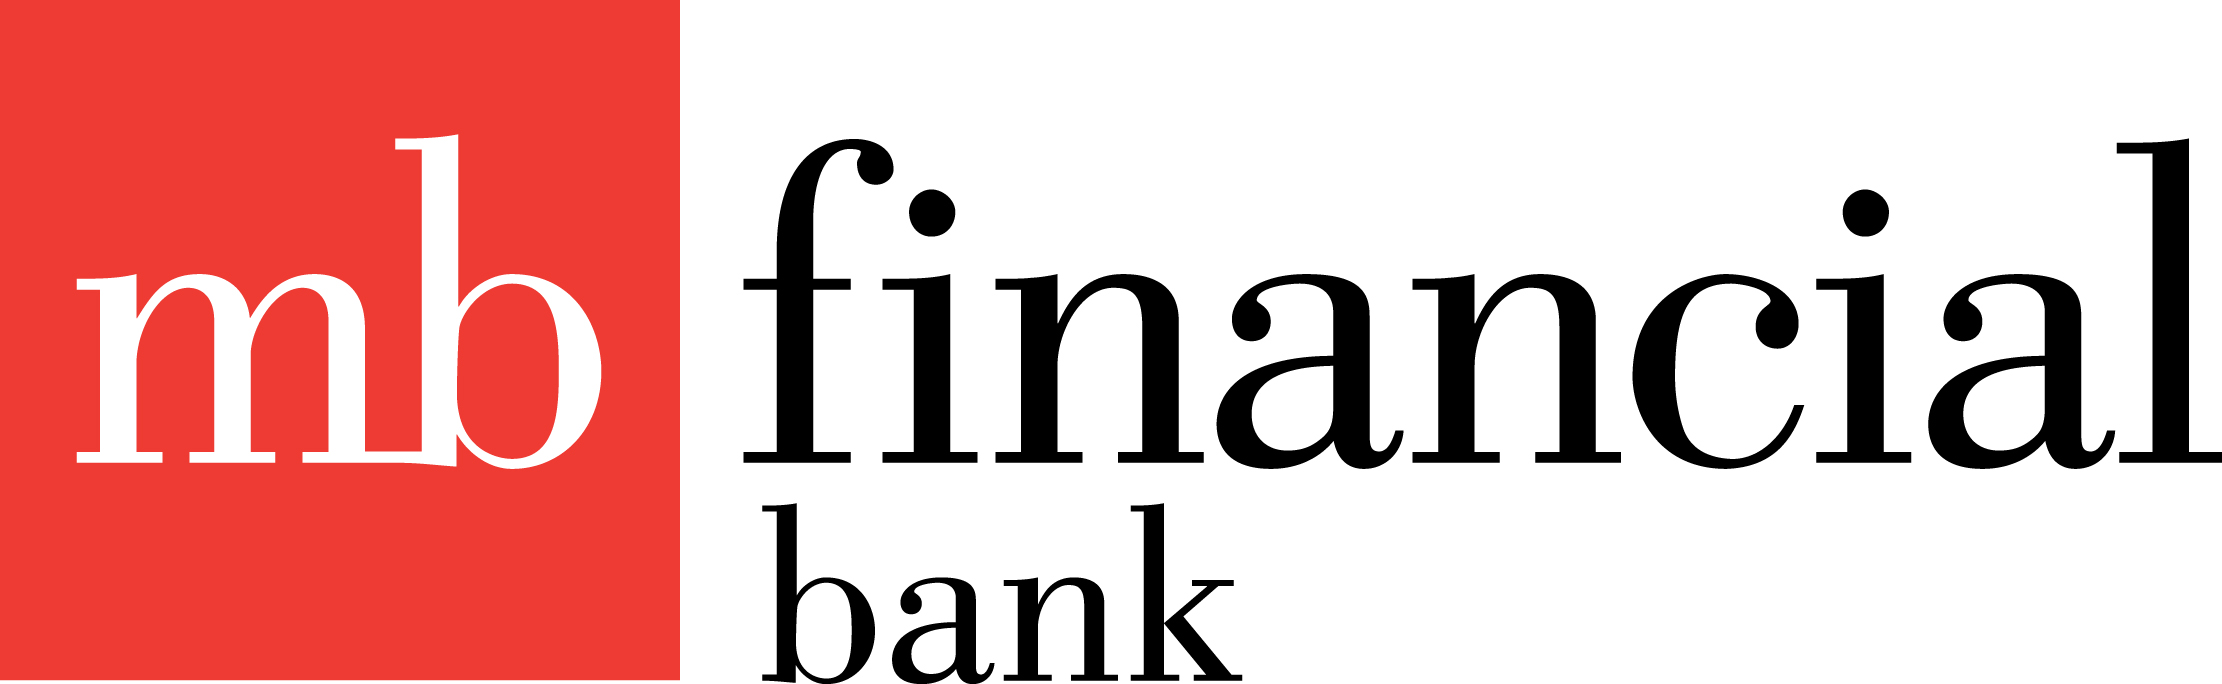 MB Financial Bank Brand Logo